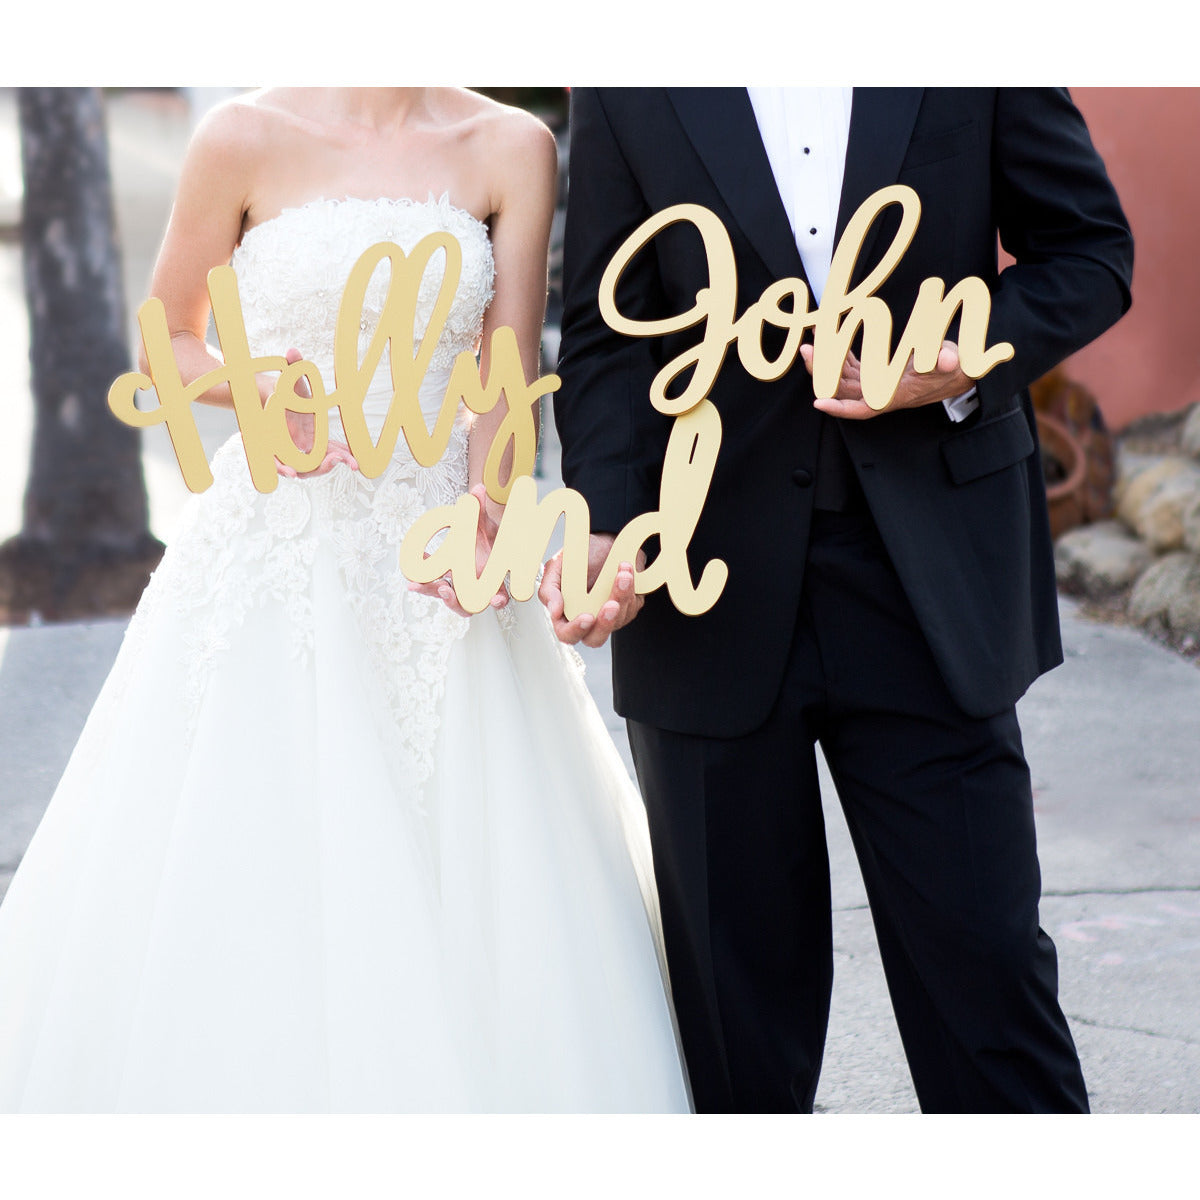 Large Name Signs Prop Set (3-Piece) - Wedding Decor Gifts